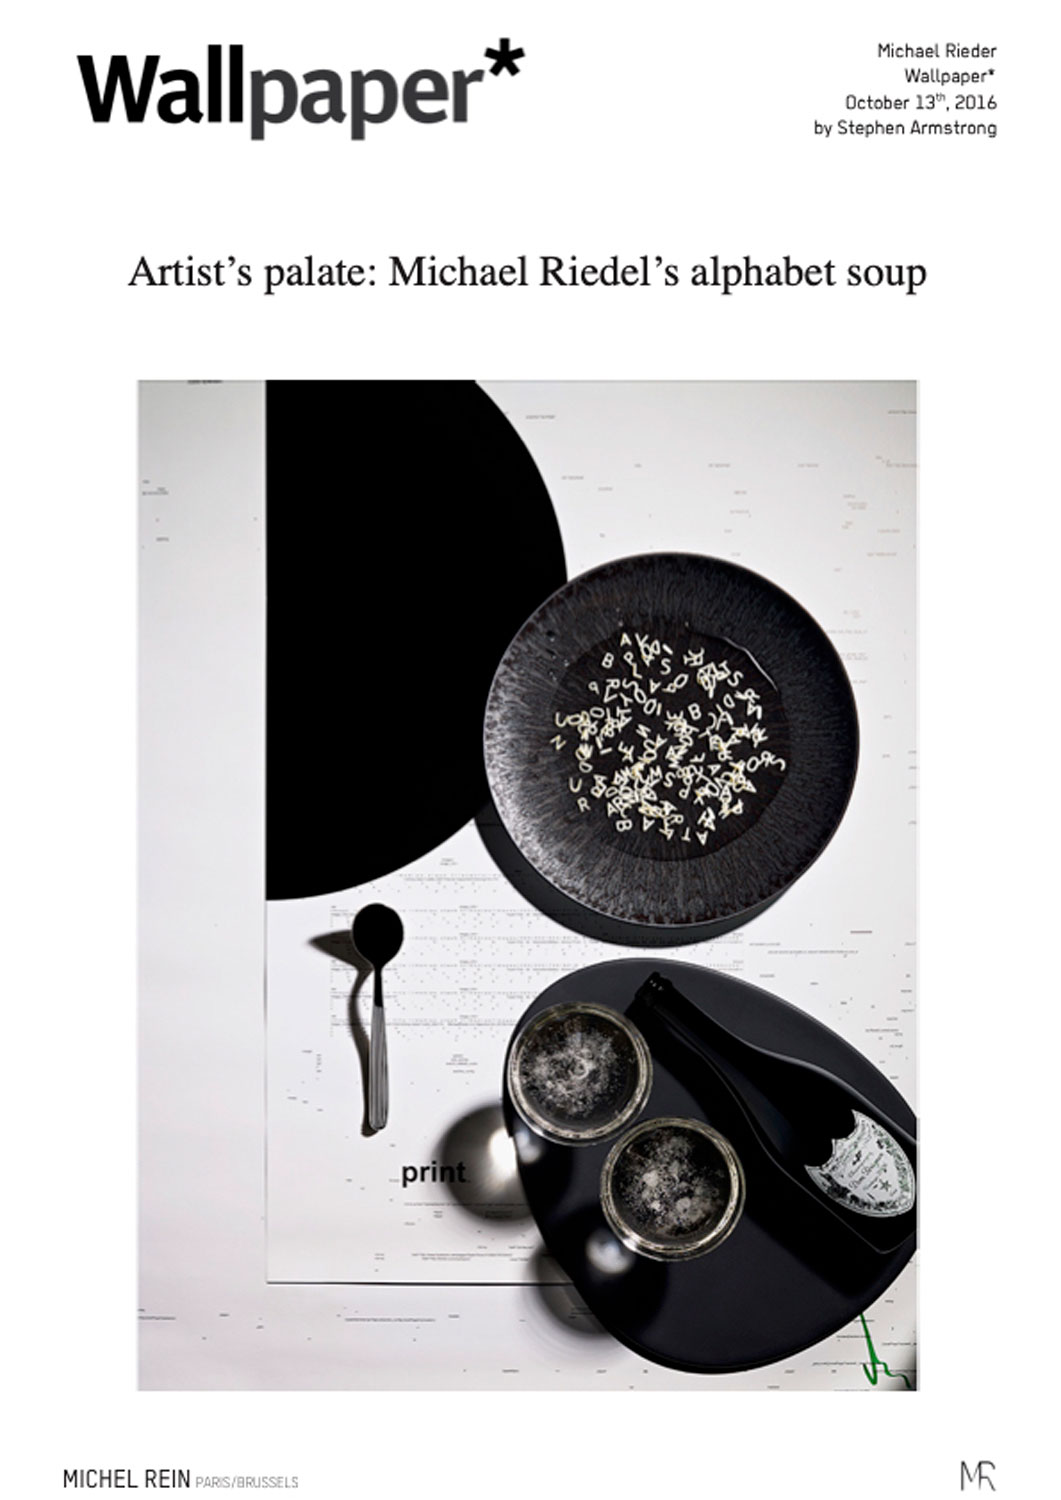 Michael Riedel - Wallpaper*